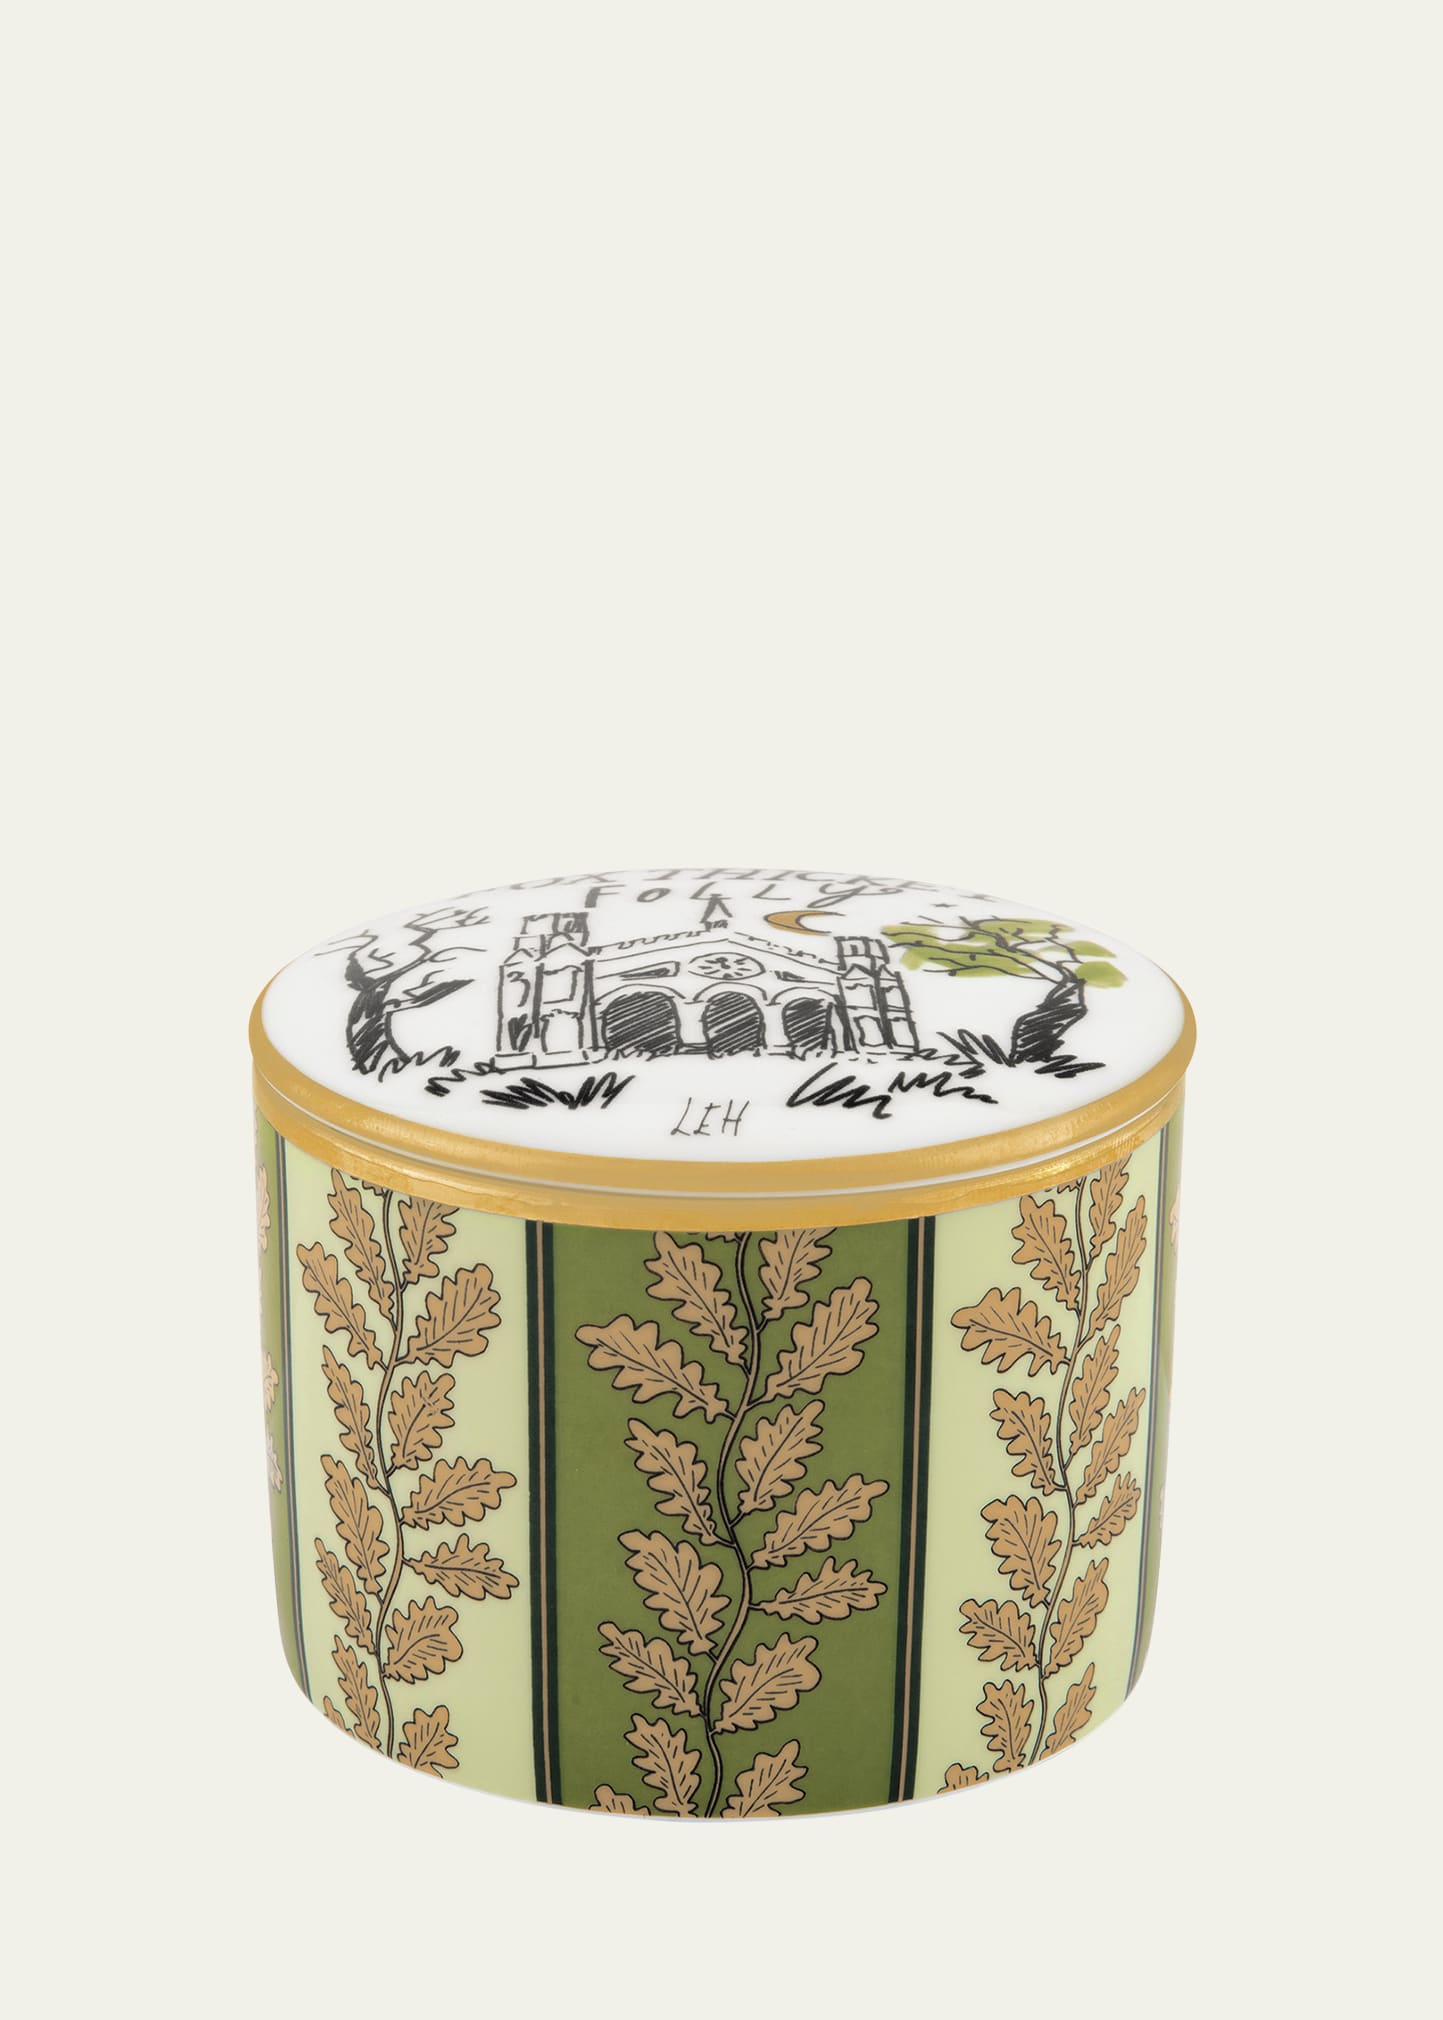 Ginori 1735 Fox Thicket Folly Porcelain Box In Multicolor